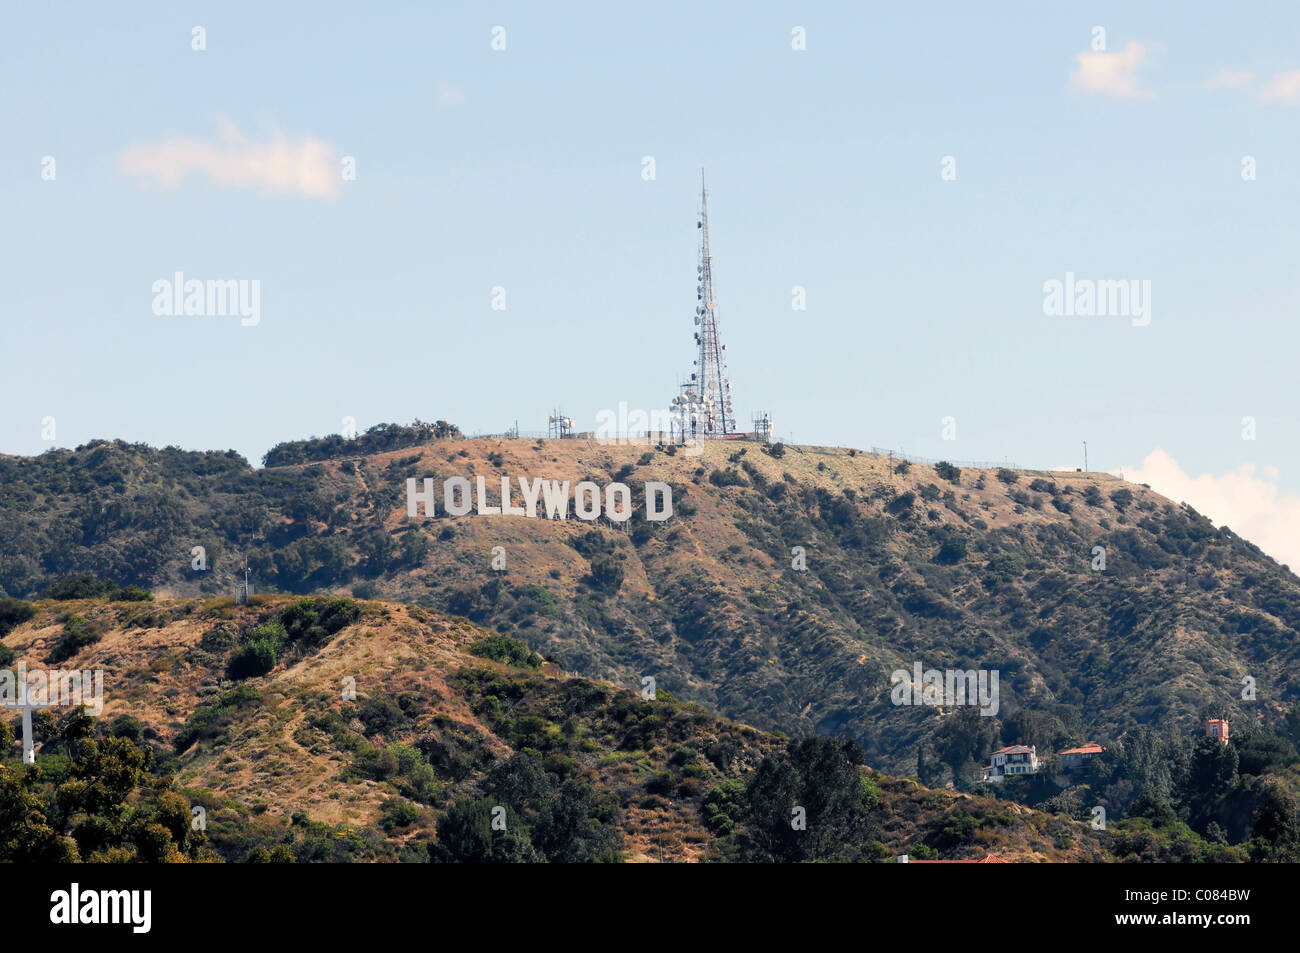 Hollywood sign, Hollywood, Los Angeles, California, USA Stock Photo